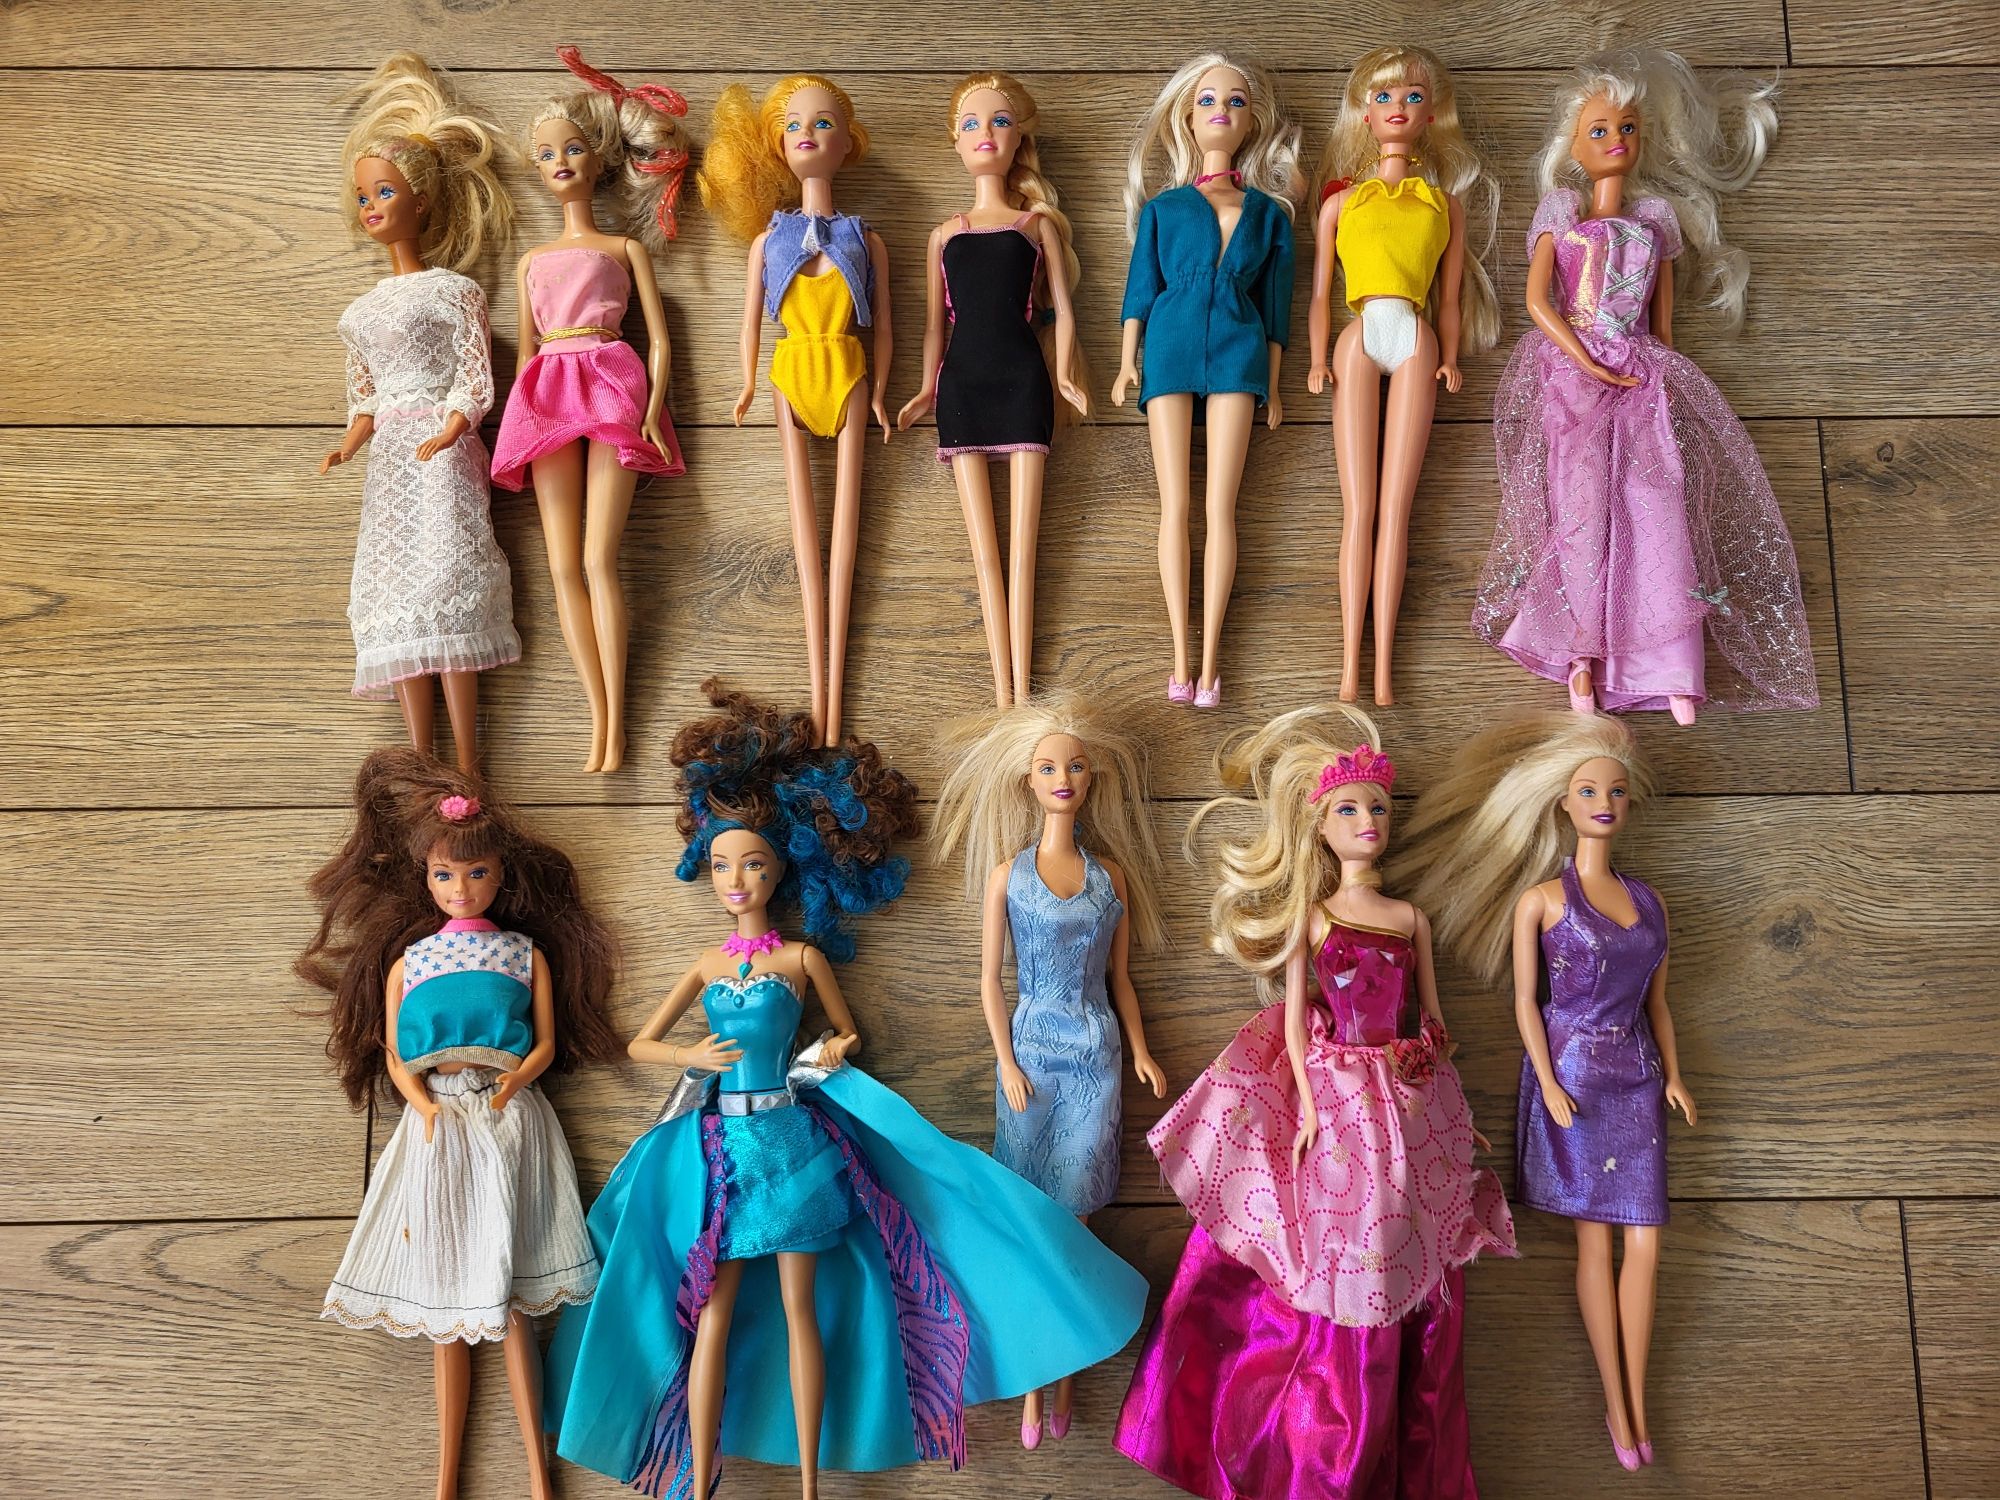 Lalka lalki Barbie